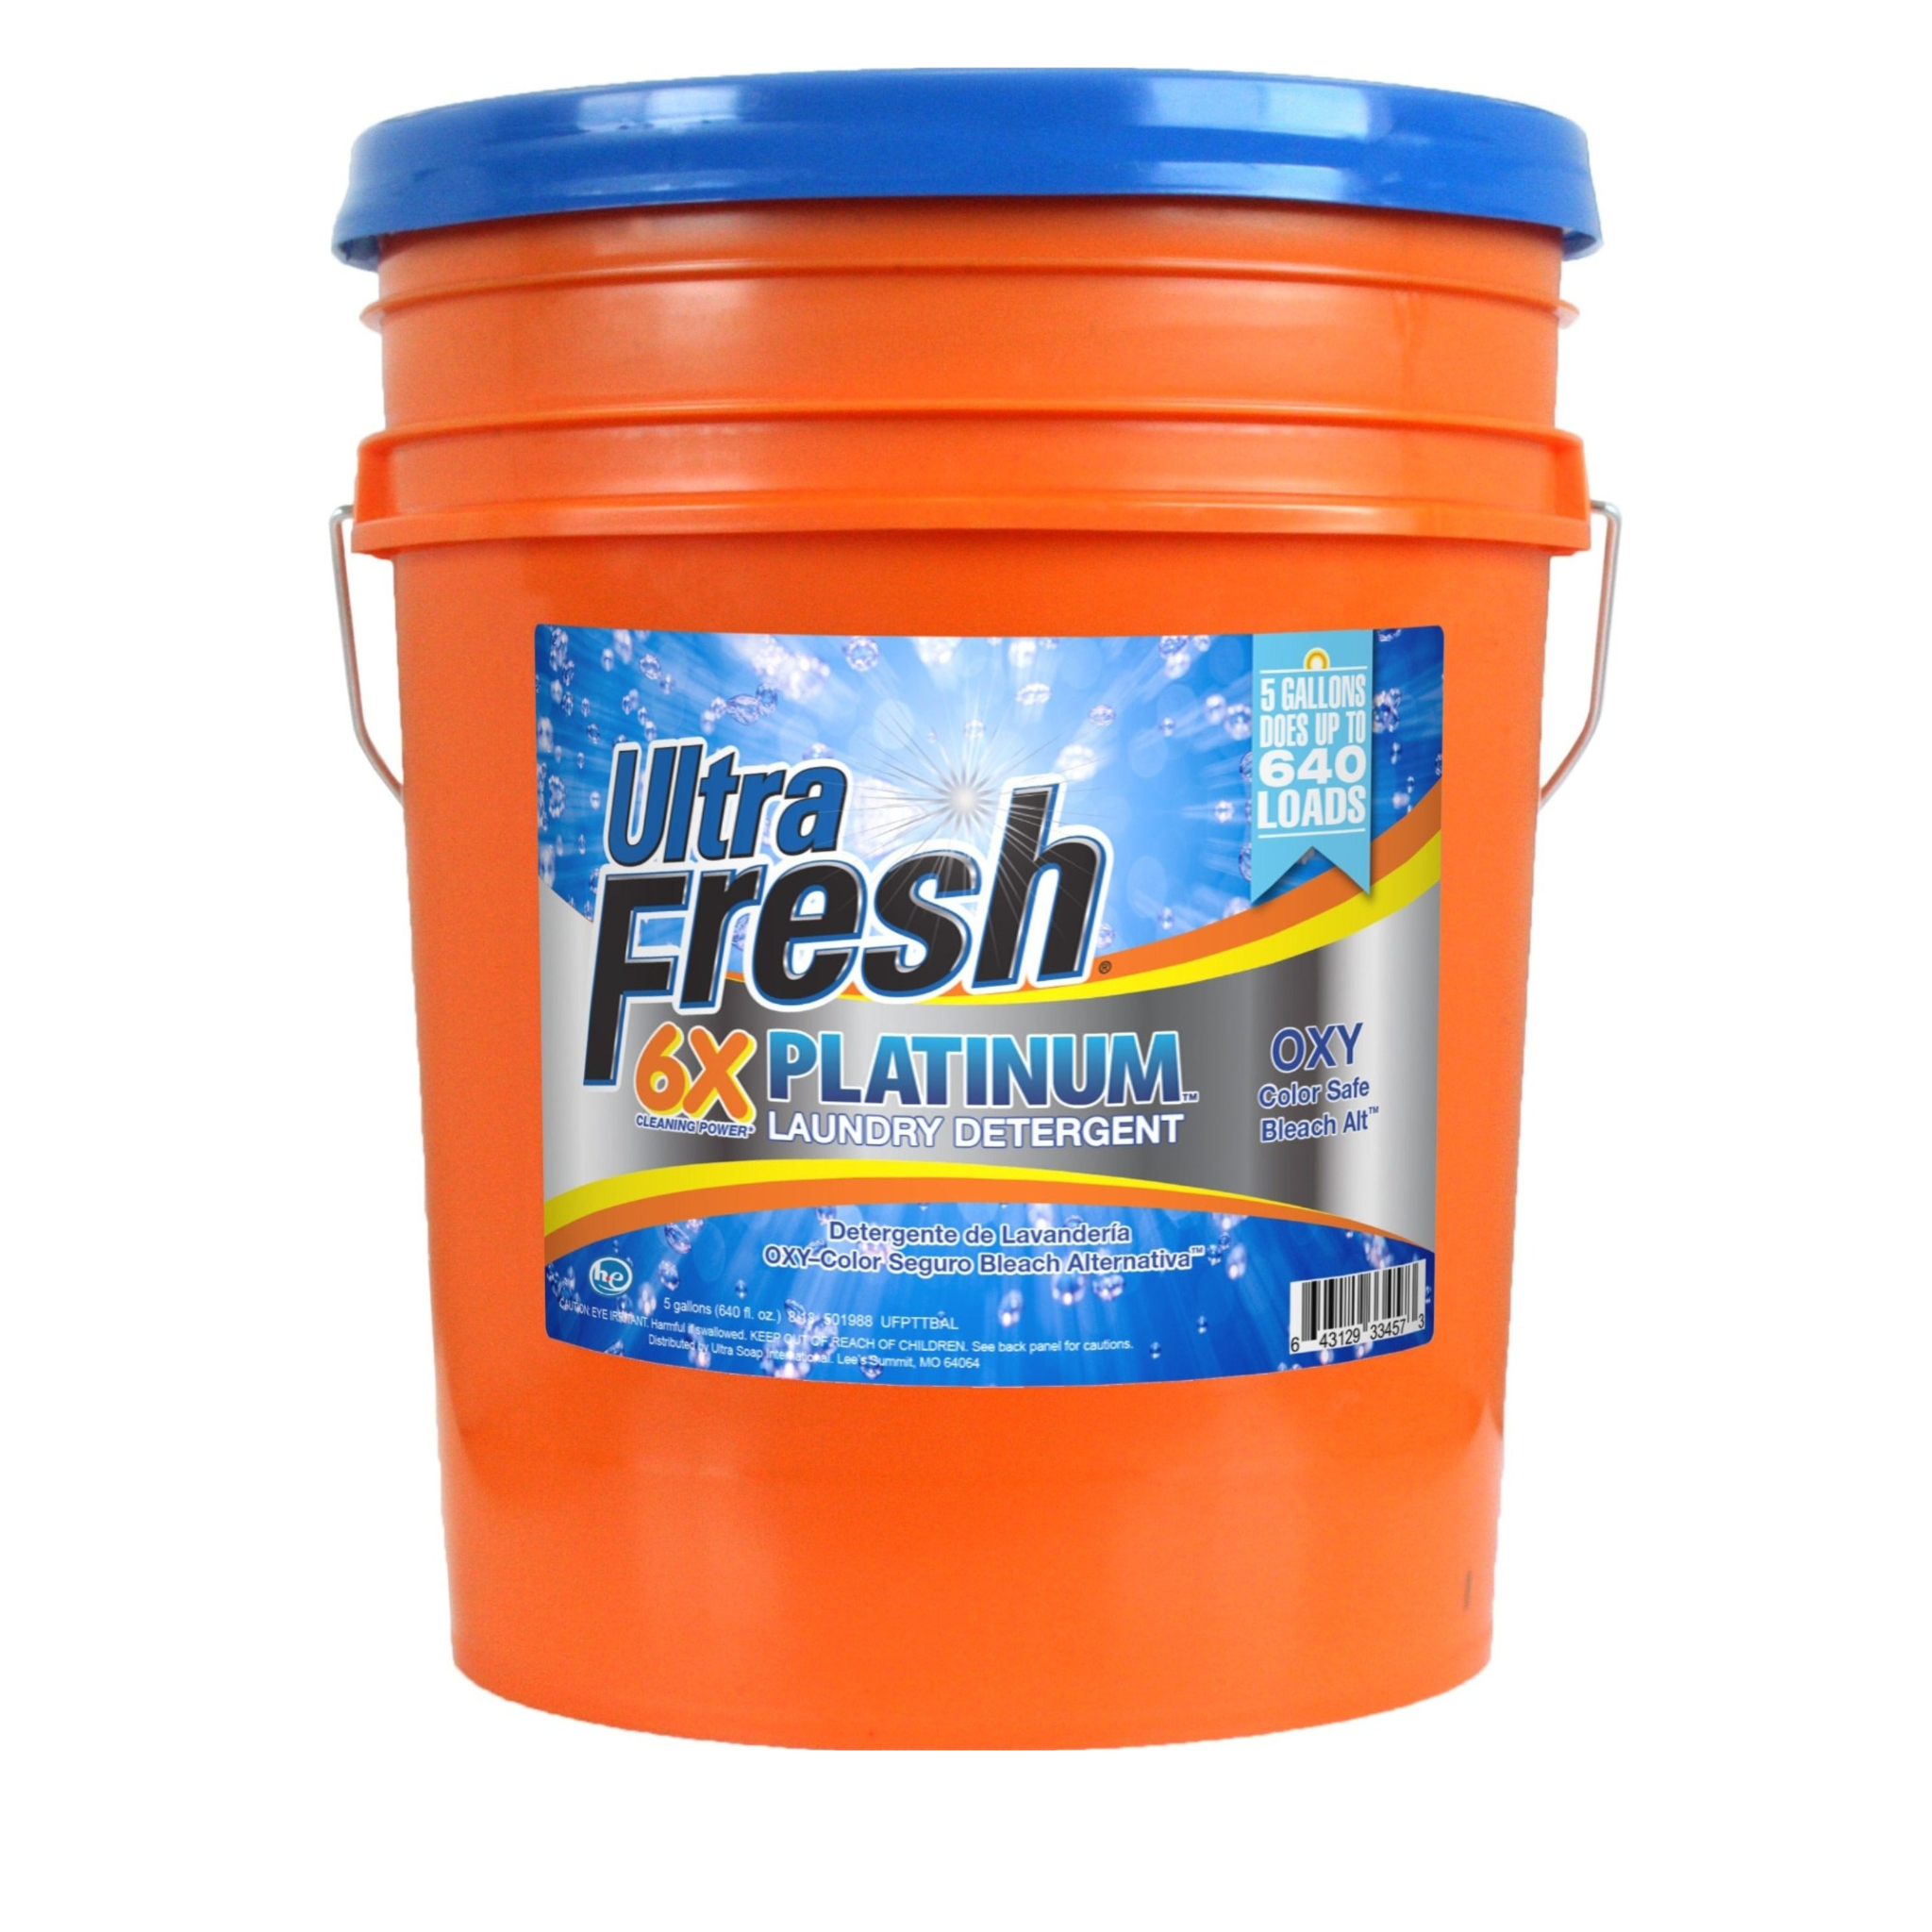 Ultra Fresh Platinum Bleach Alternative + Oxy 6X Laundry Detergent - 5 Gallons